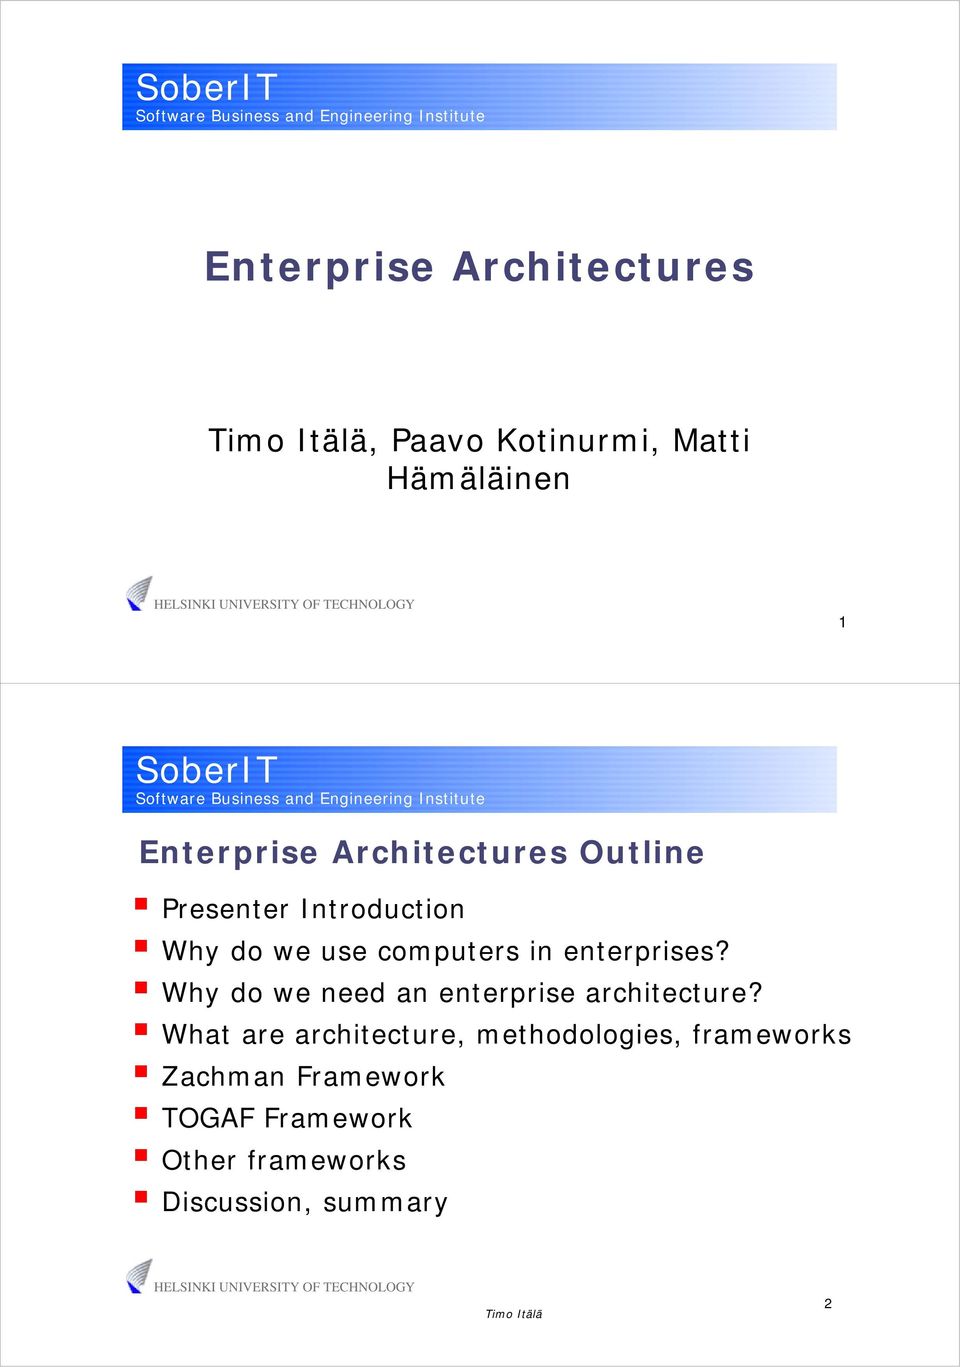 enterprises? Why do we need an enterprise architecture?